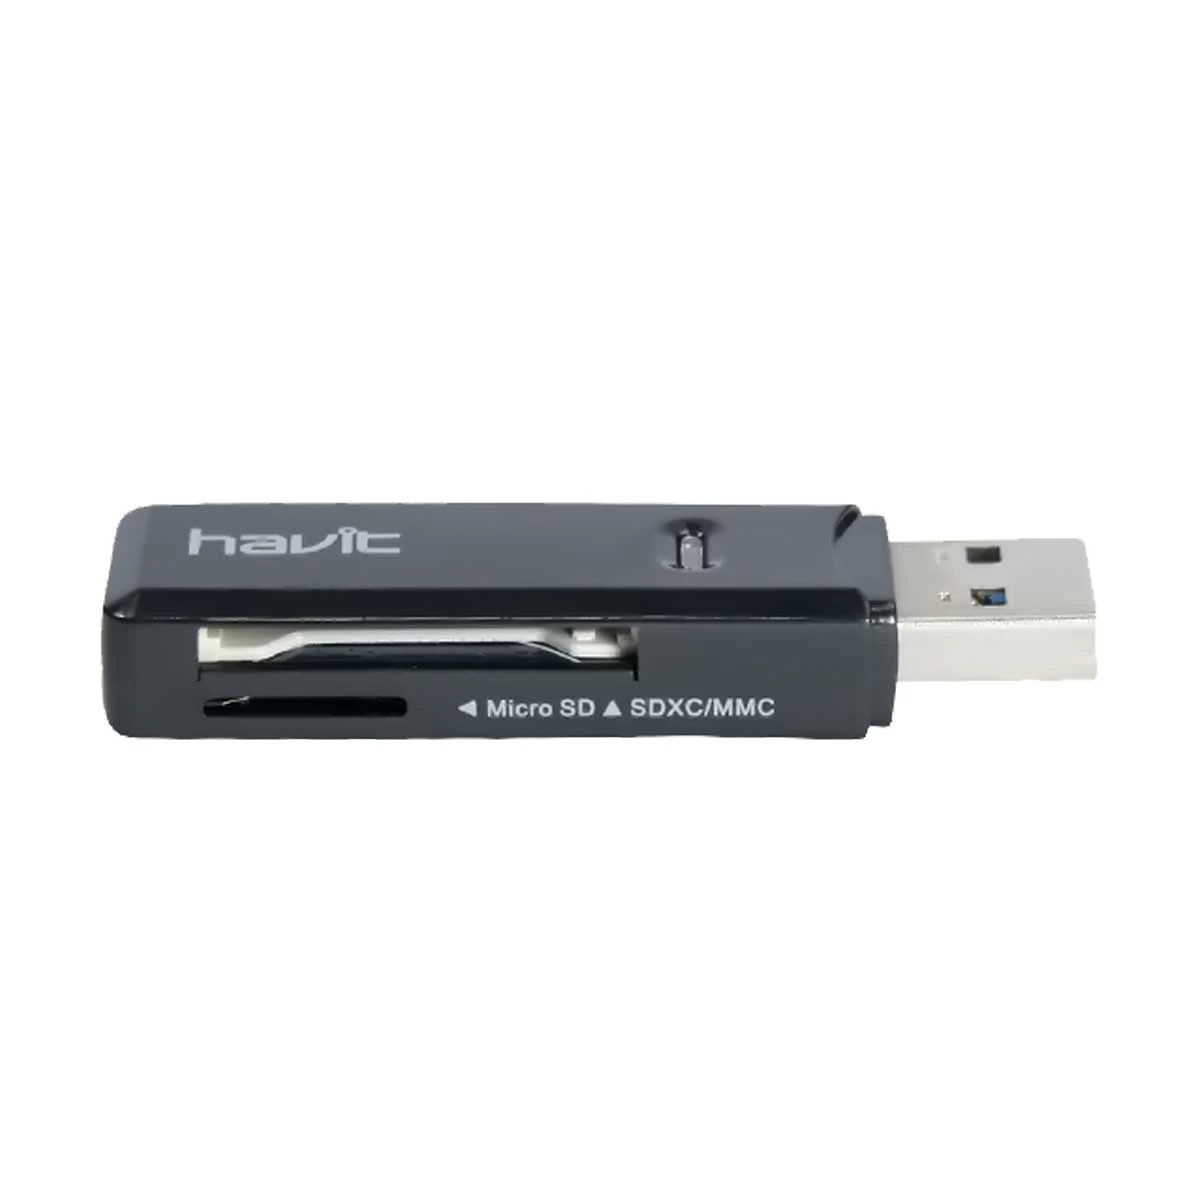 LECTOR MEM MICRO SD USB 3.0 imagen lateral